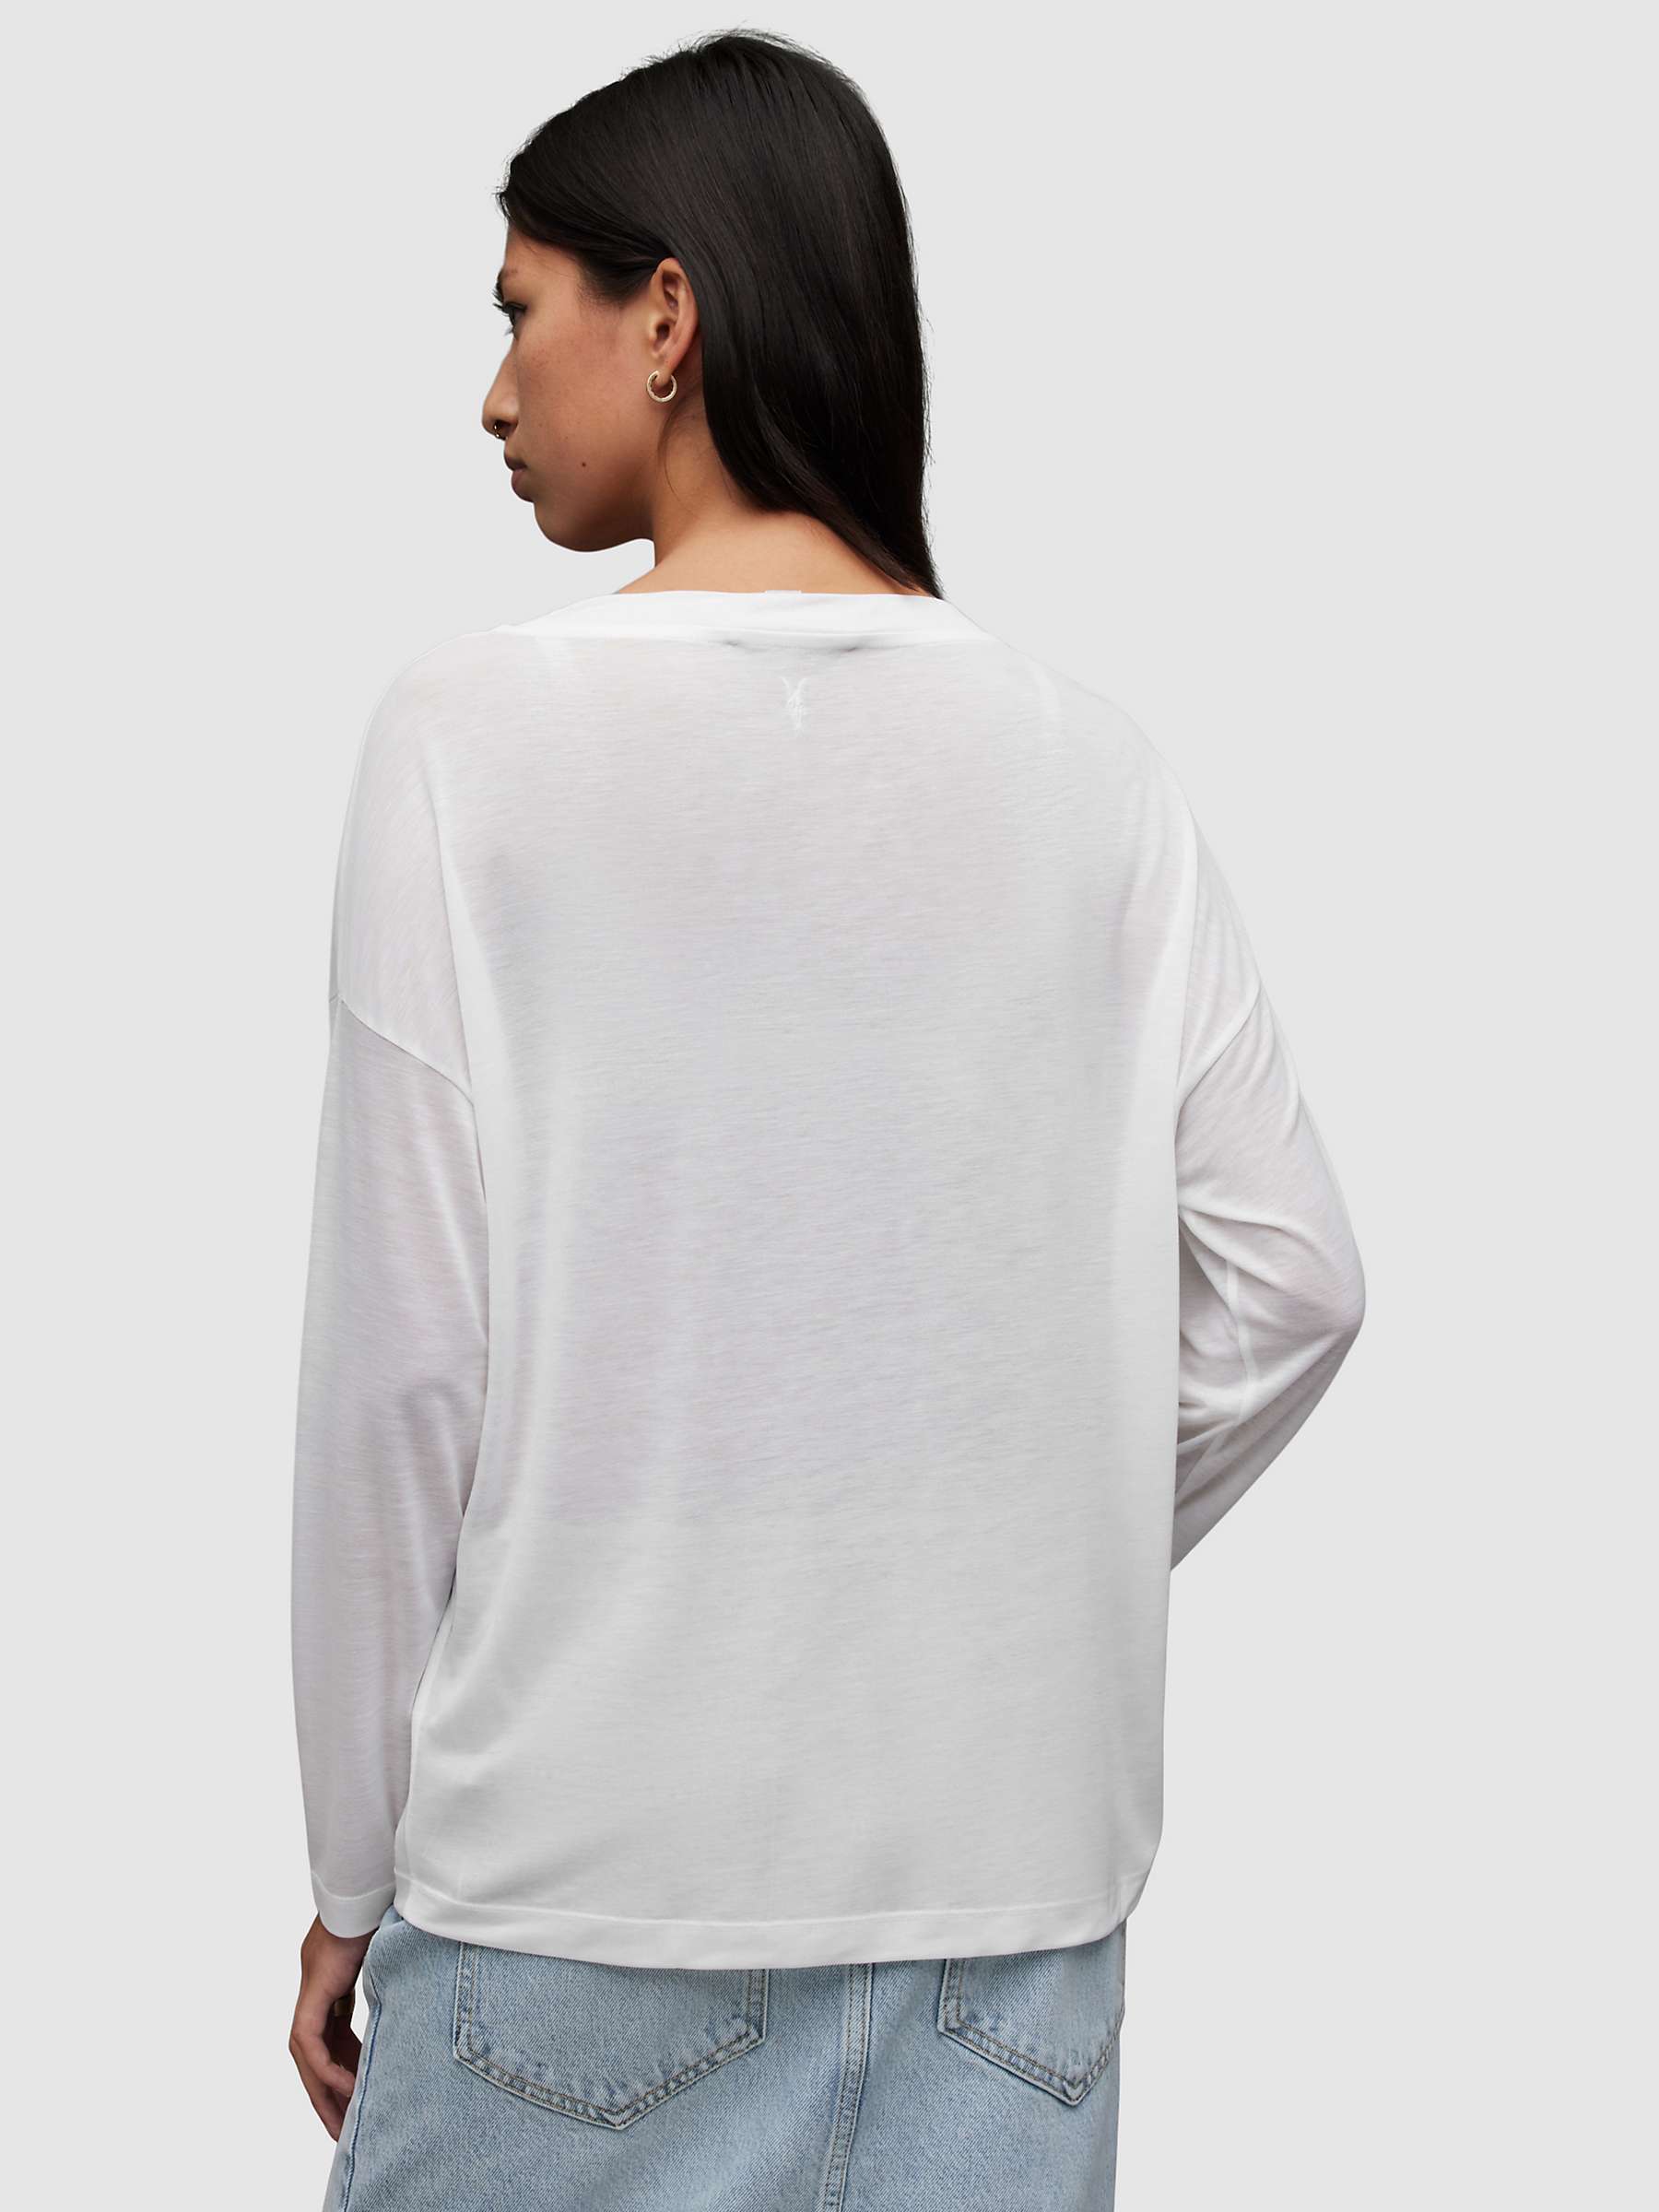 AllSaints Kati Oversized Top, White at John Lewis & Partners